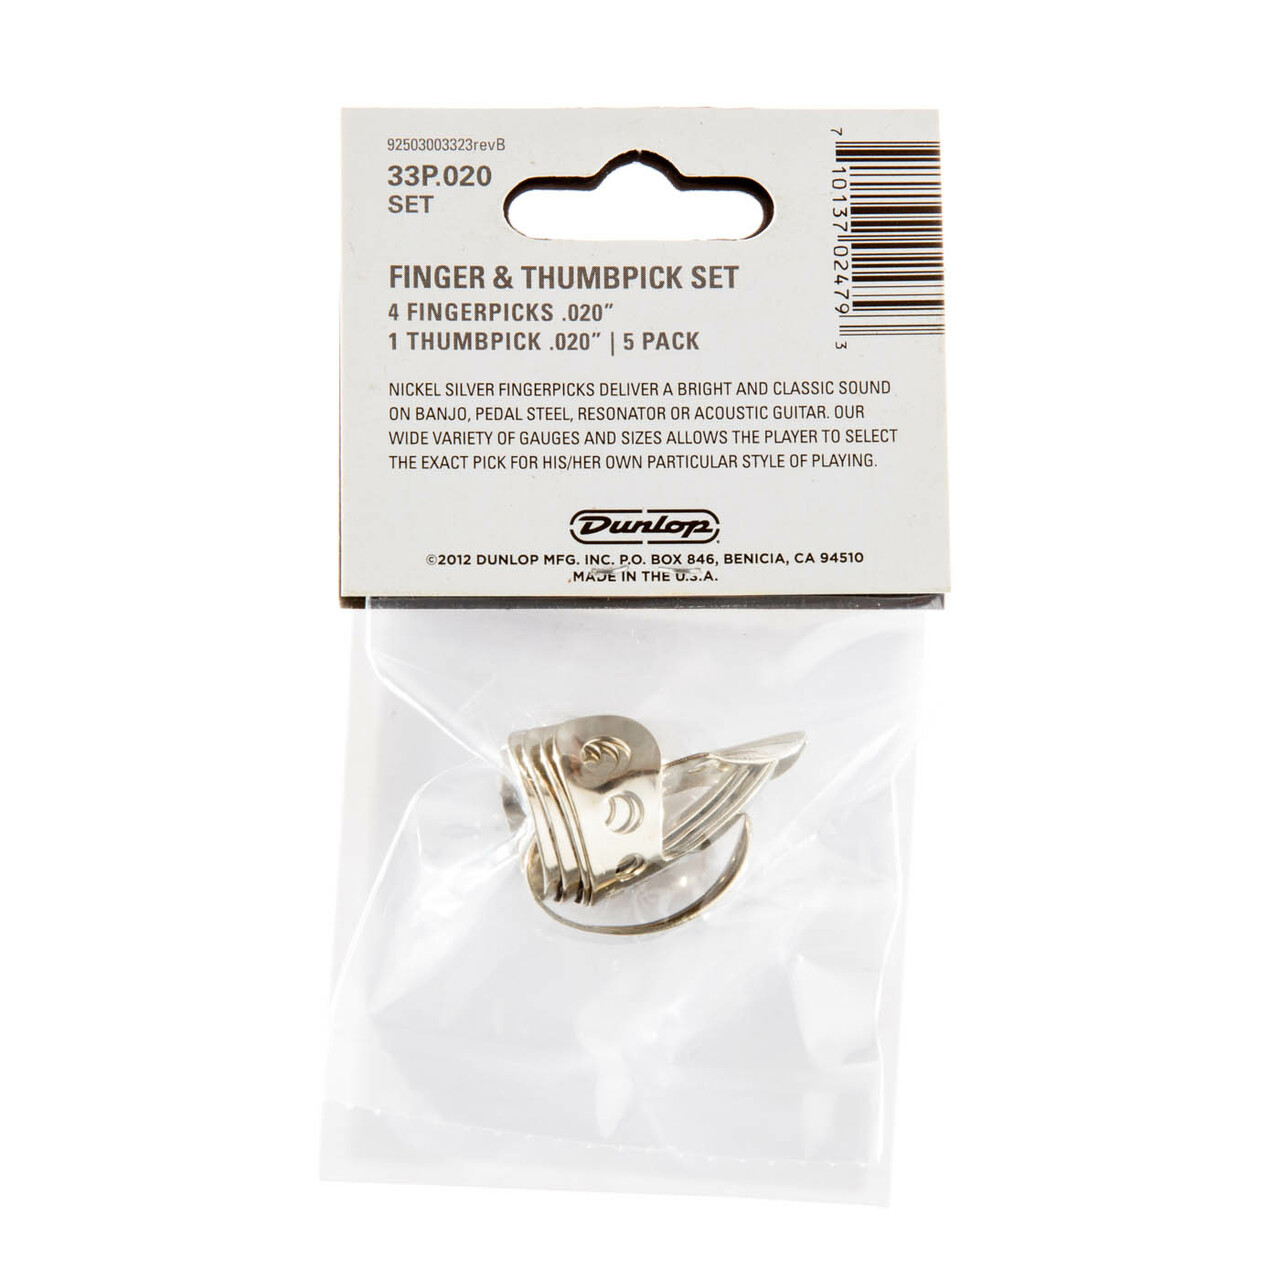 Dunlop Finger & Thumbpick Set Nickel Silver .020"